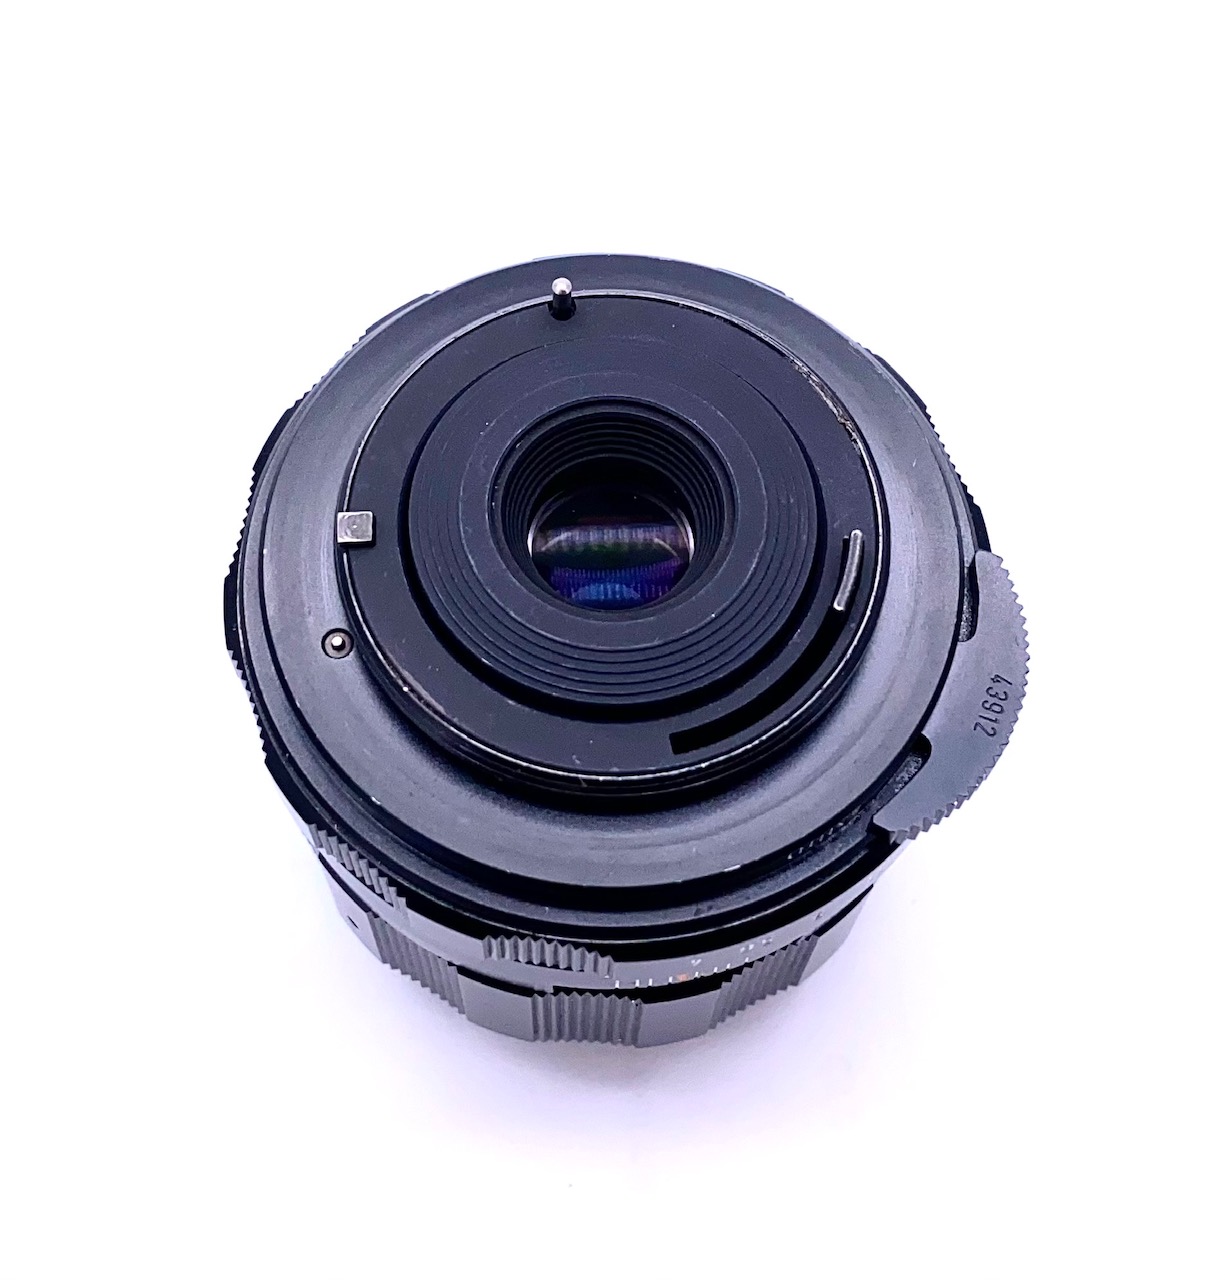 Asahi Optical Co 50mm F4 SMC Macro-Takumar Lens #8953